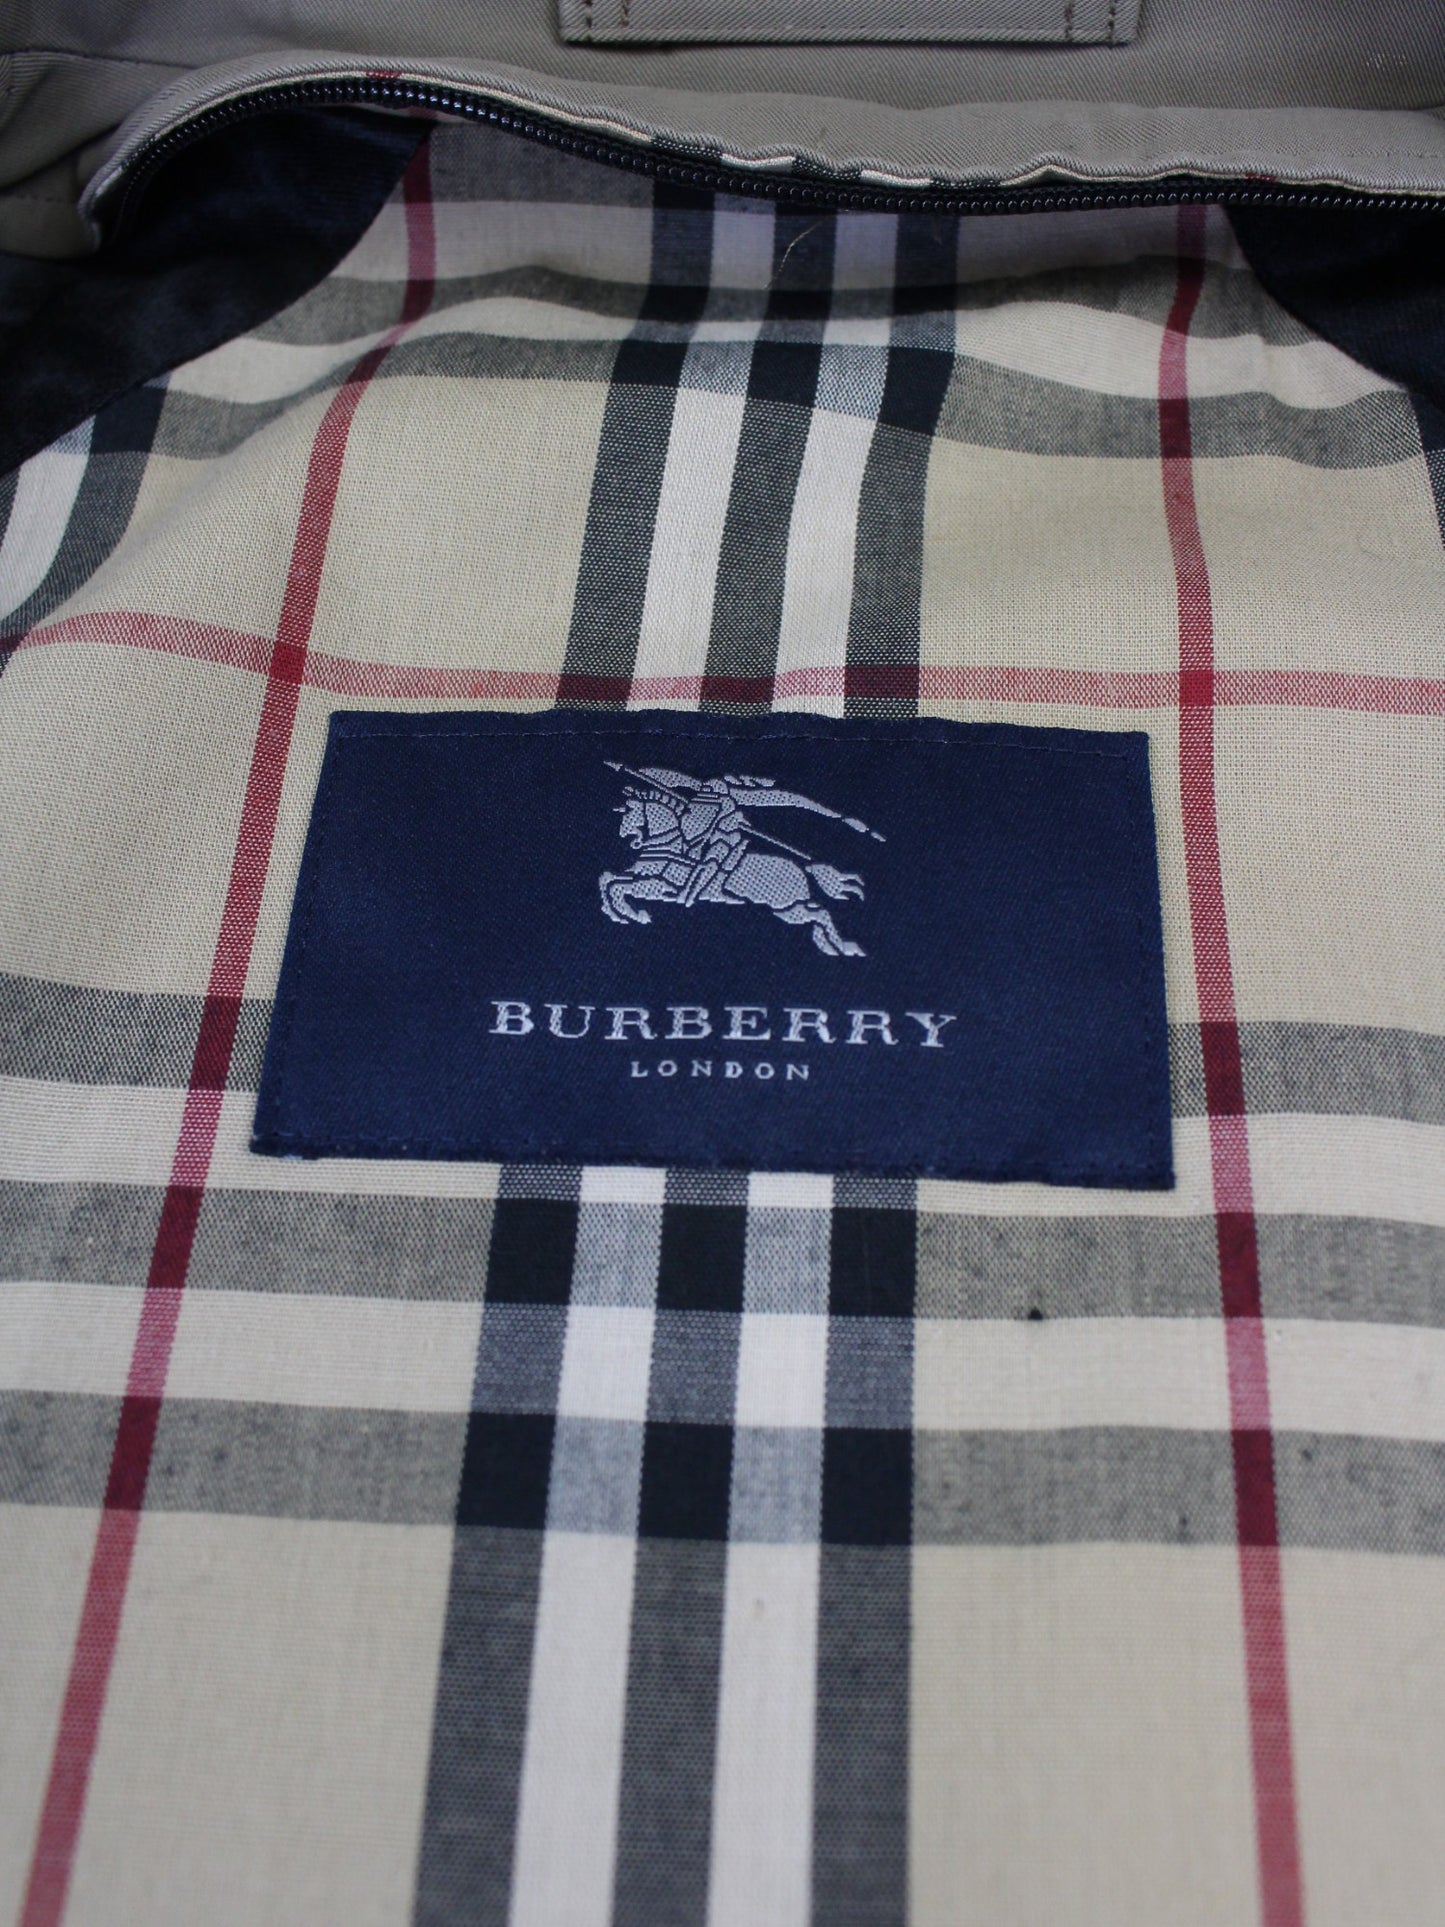 Burberry Beige Trench Coat (L)